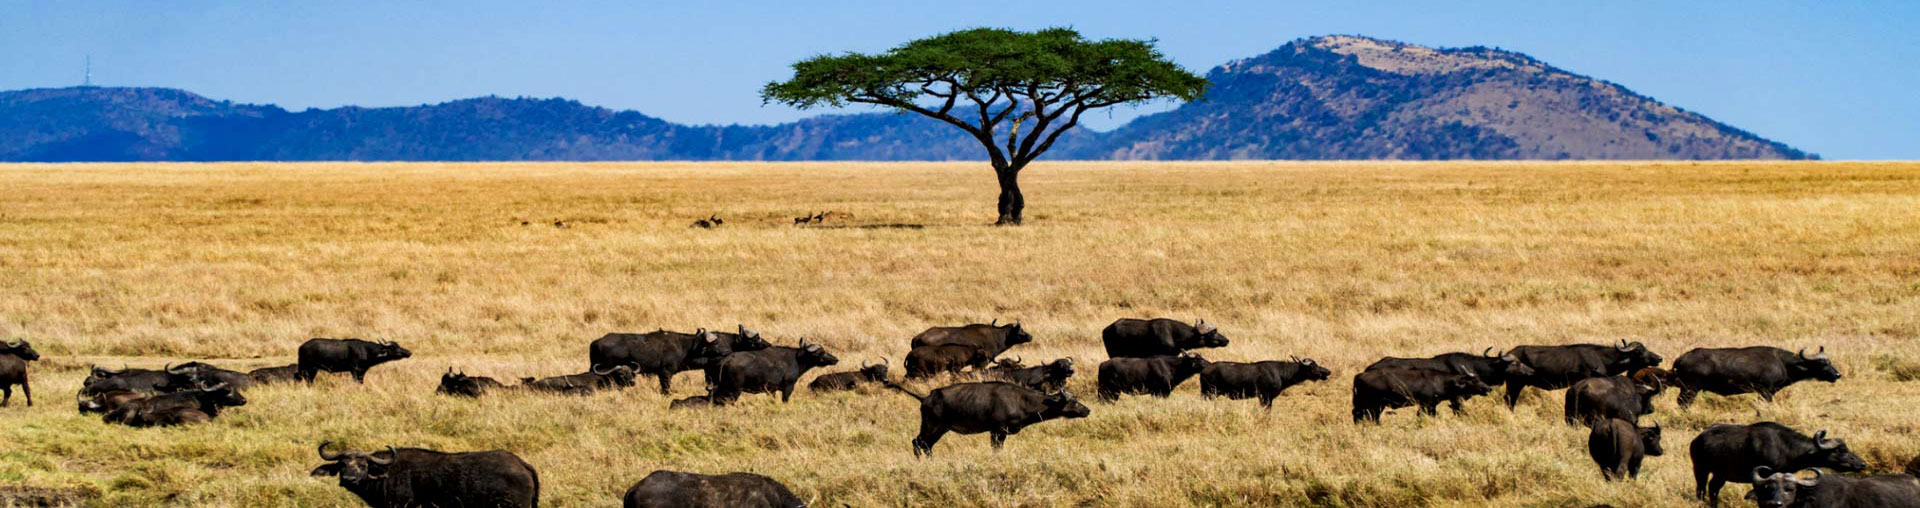 Tanzania Safari Tour Package From India